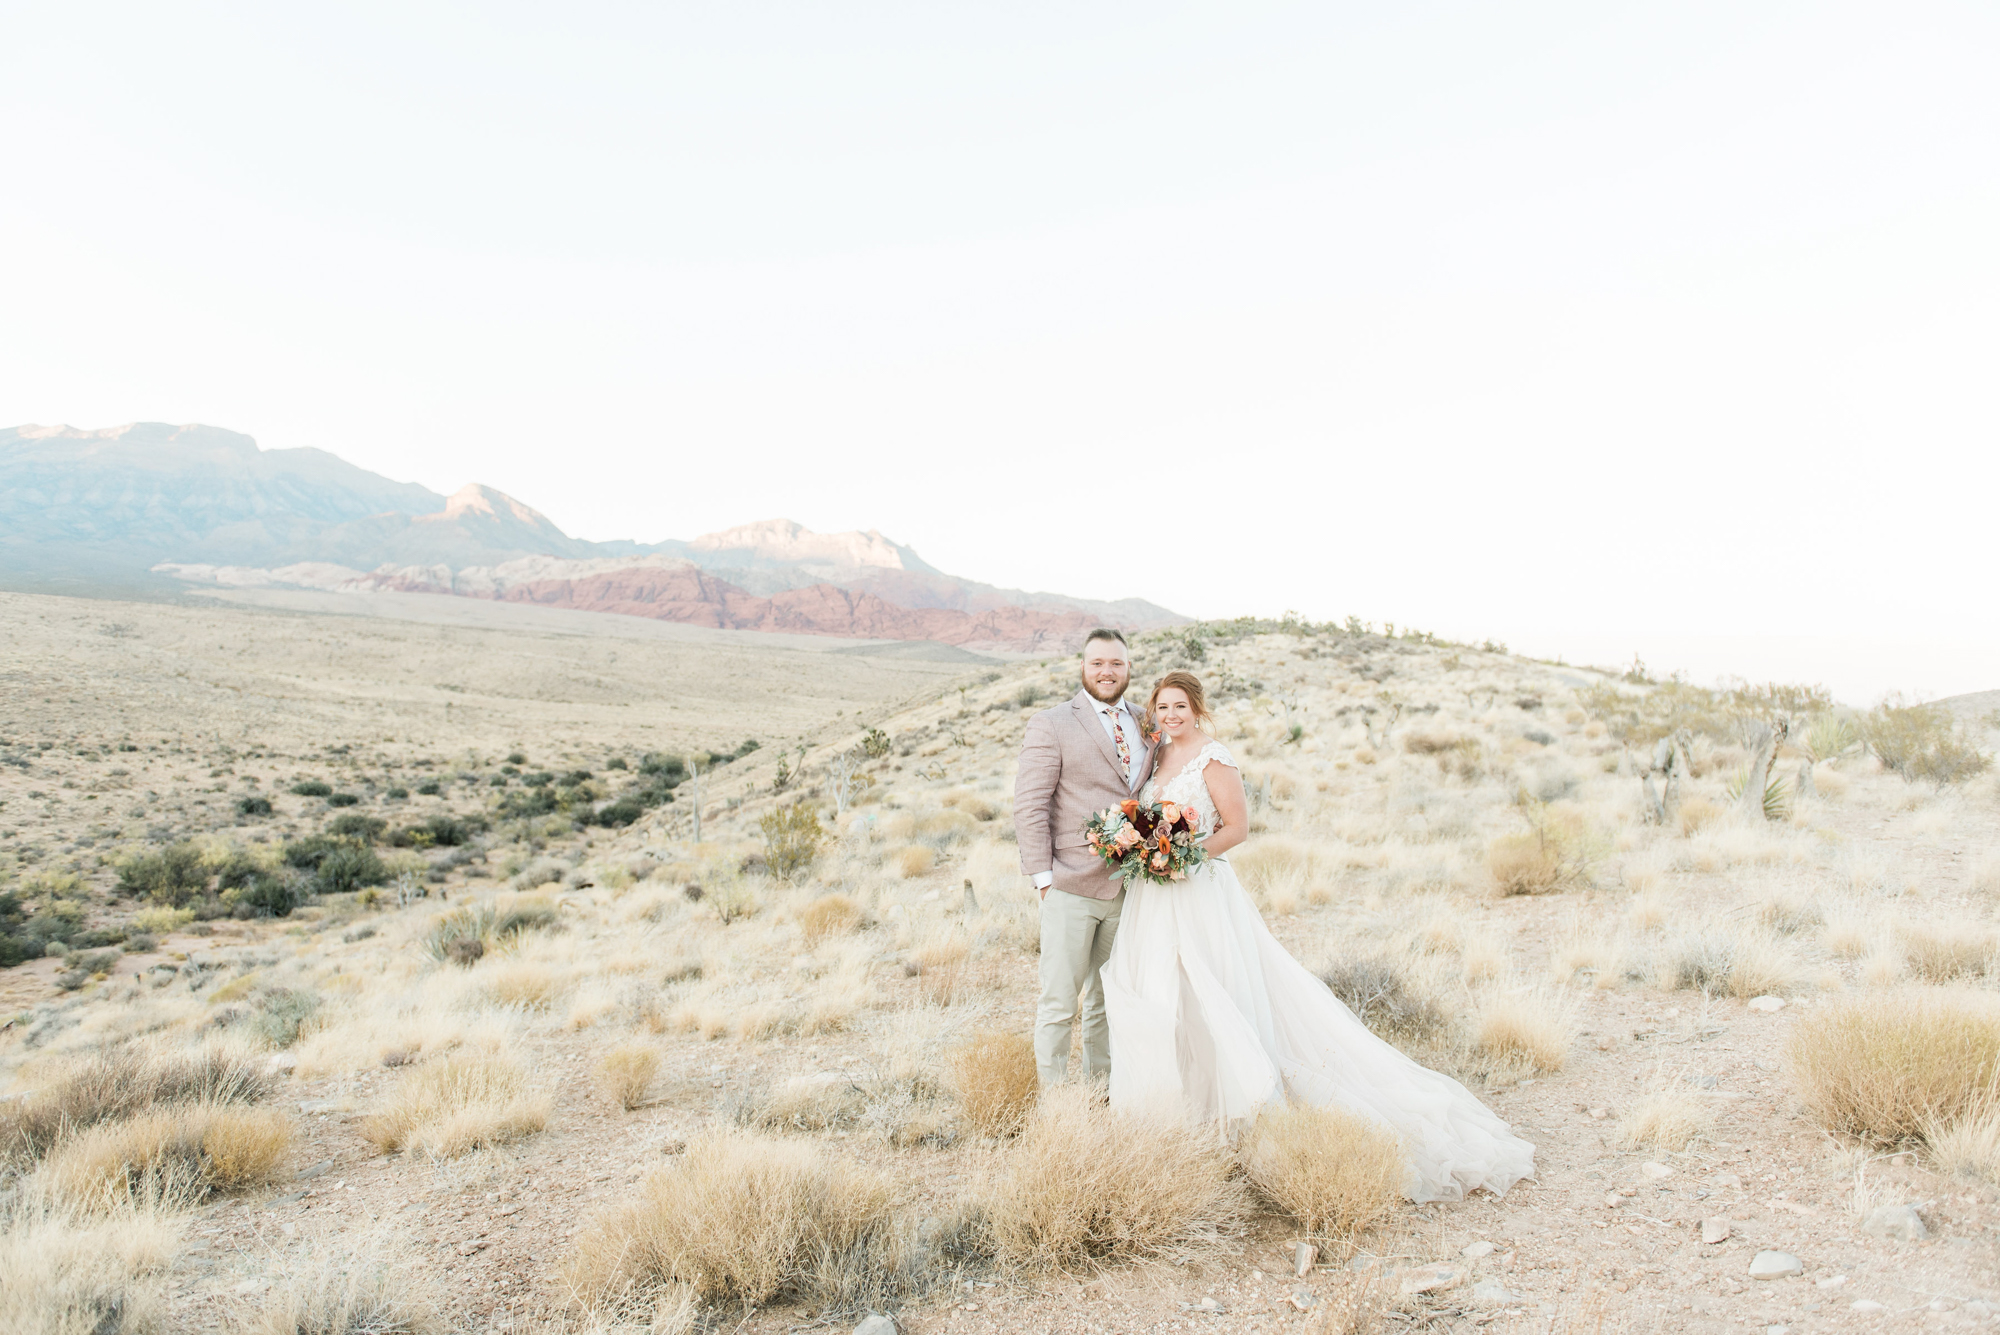 Emily + Josh: A Real Wedding in Overlook